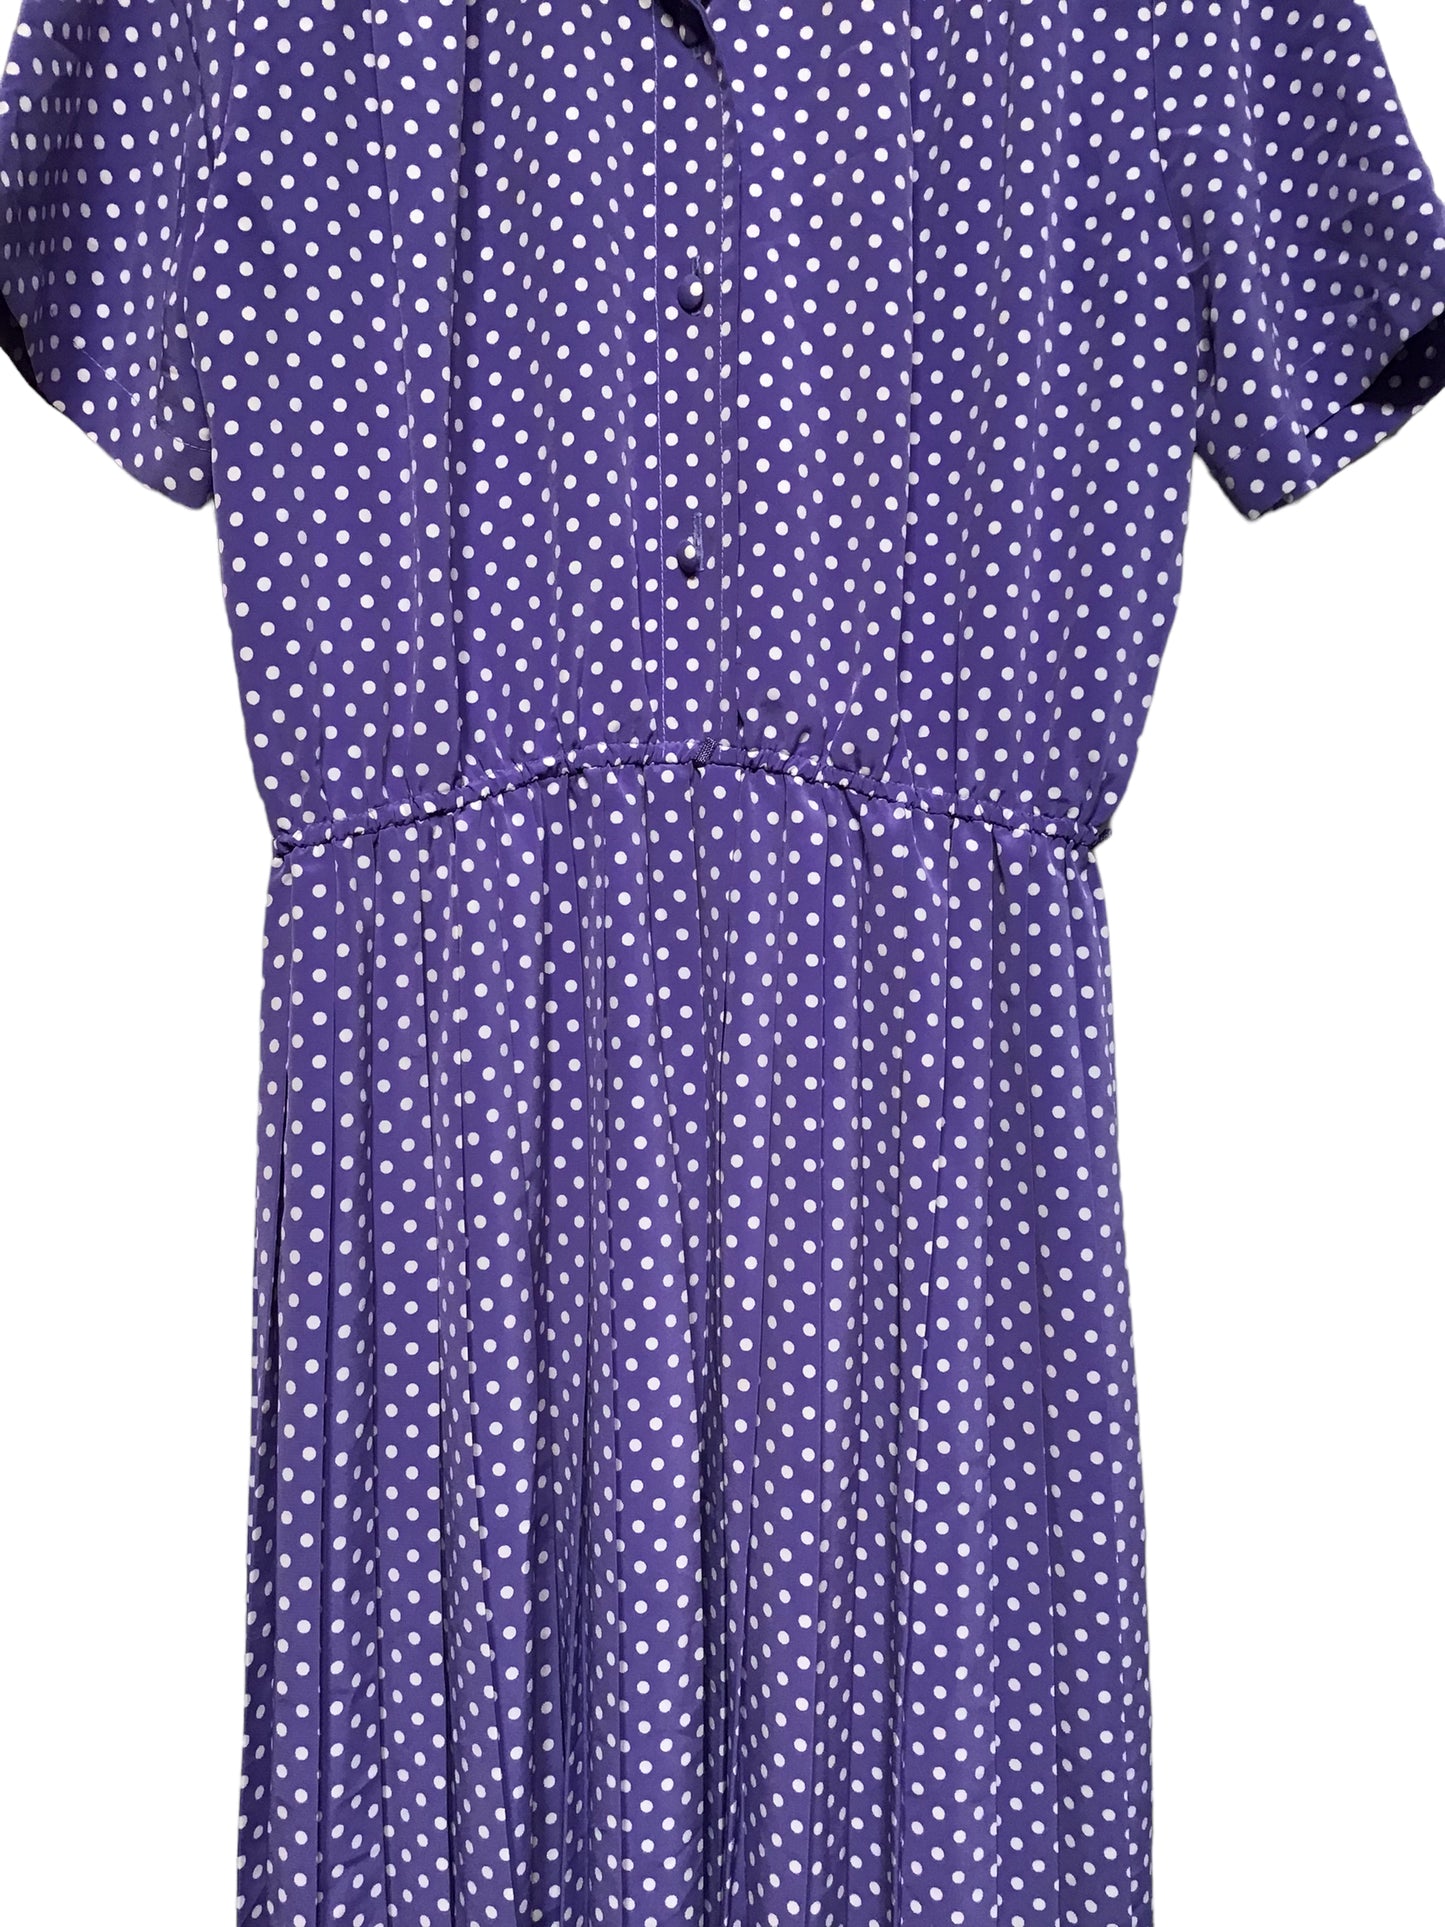 Eastex Women’s Dress (Size L)